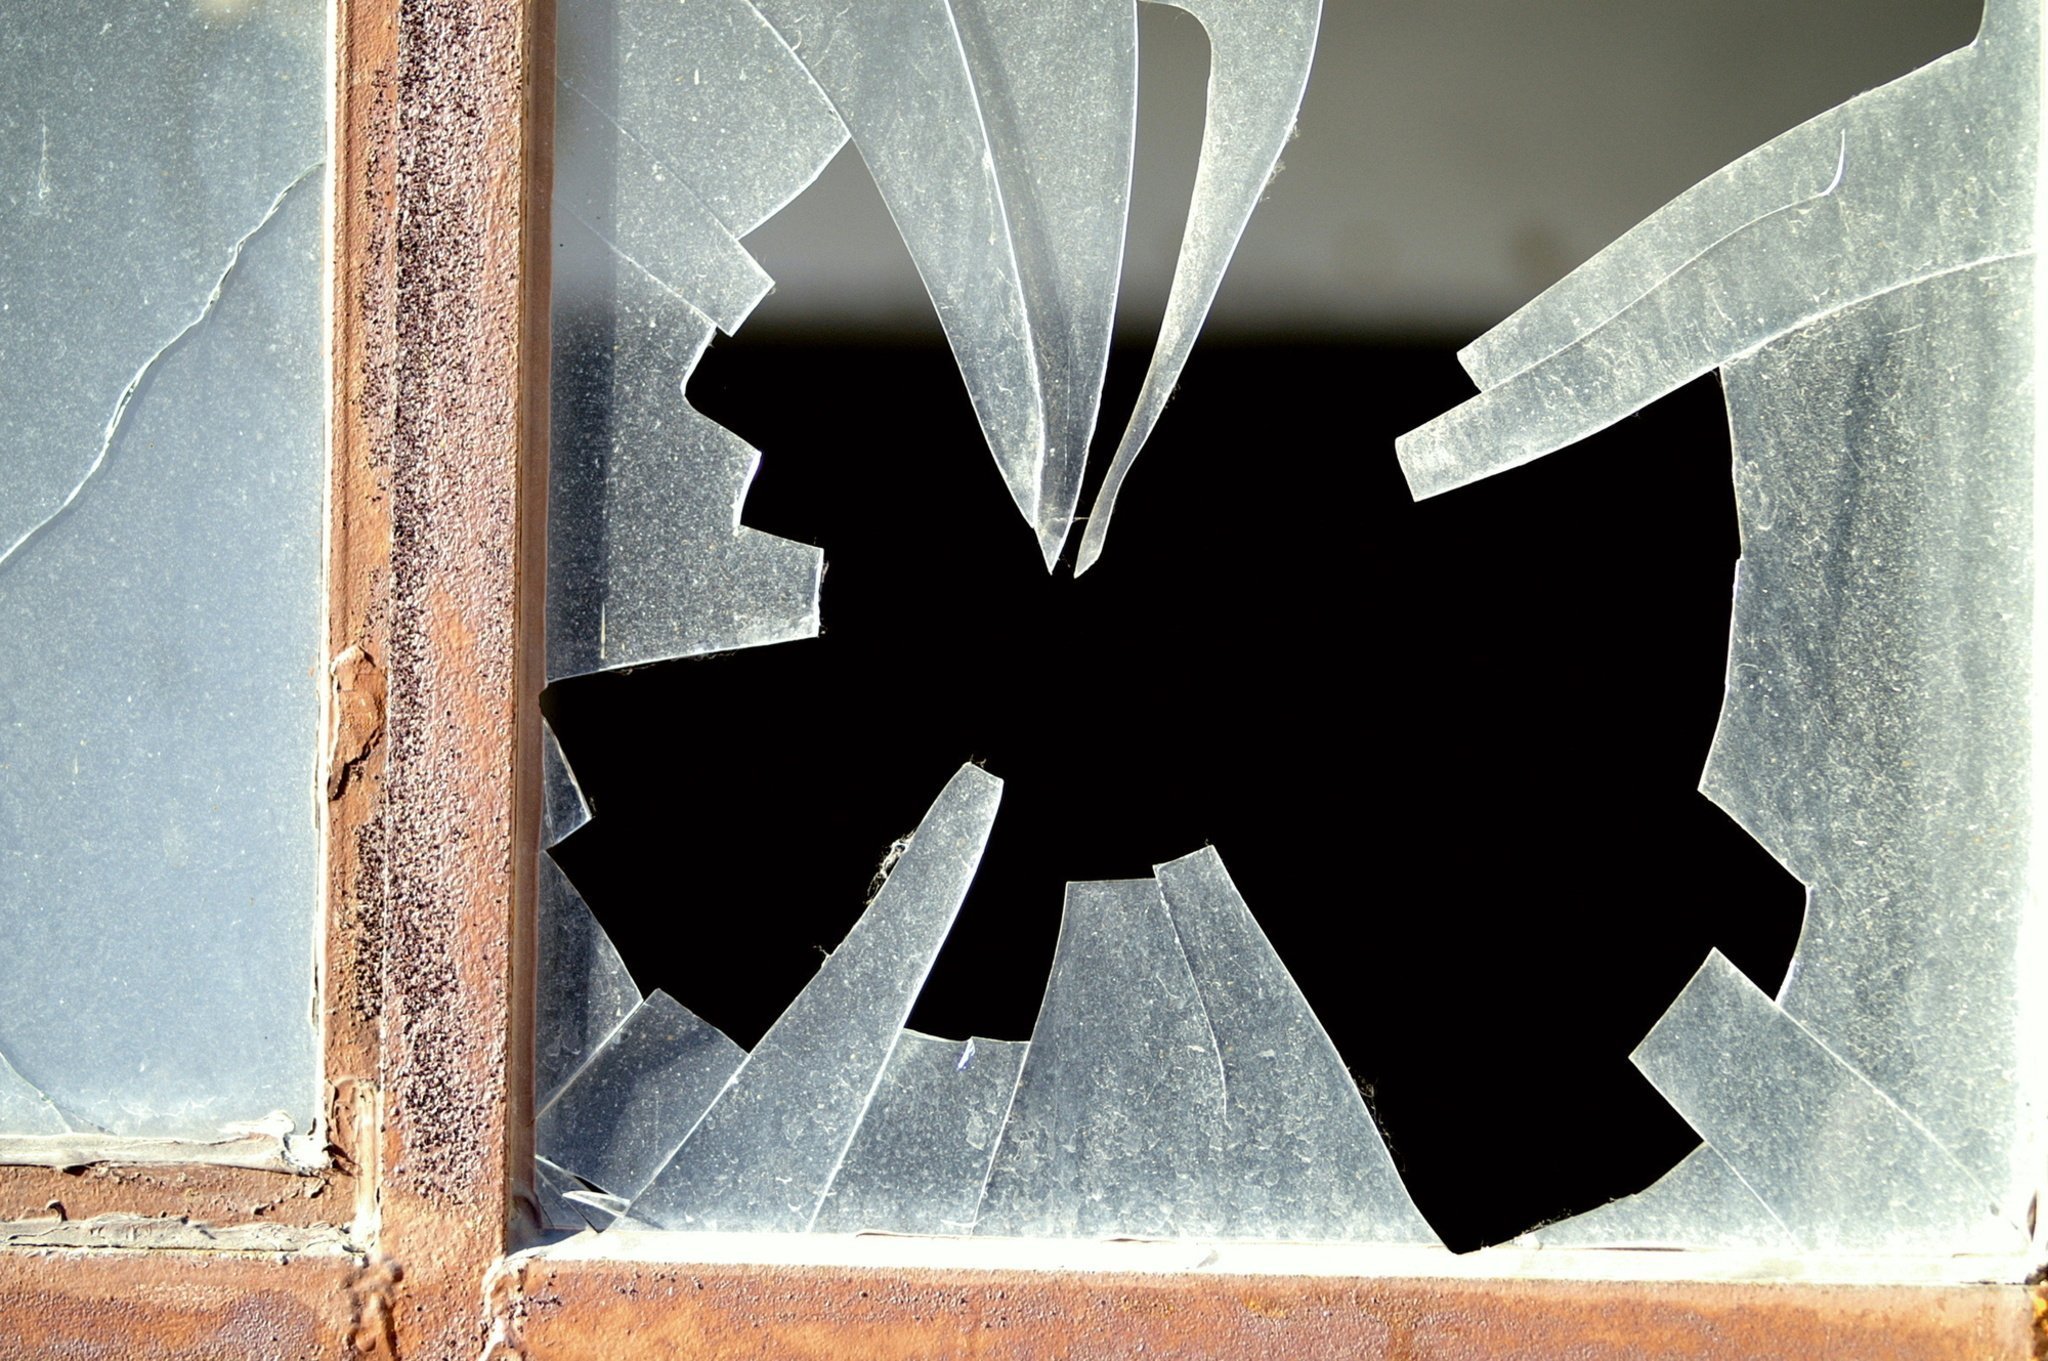 Разбить стекло дома. Разбитое окно. Разбитое окно в доме. Разбитые окна в доме. Разбитое стекло в окне.